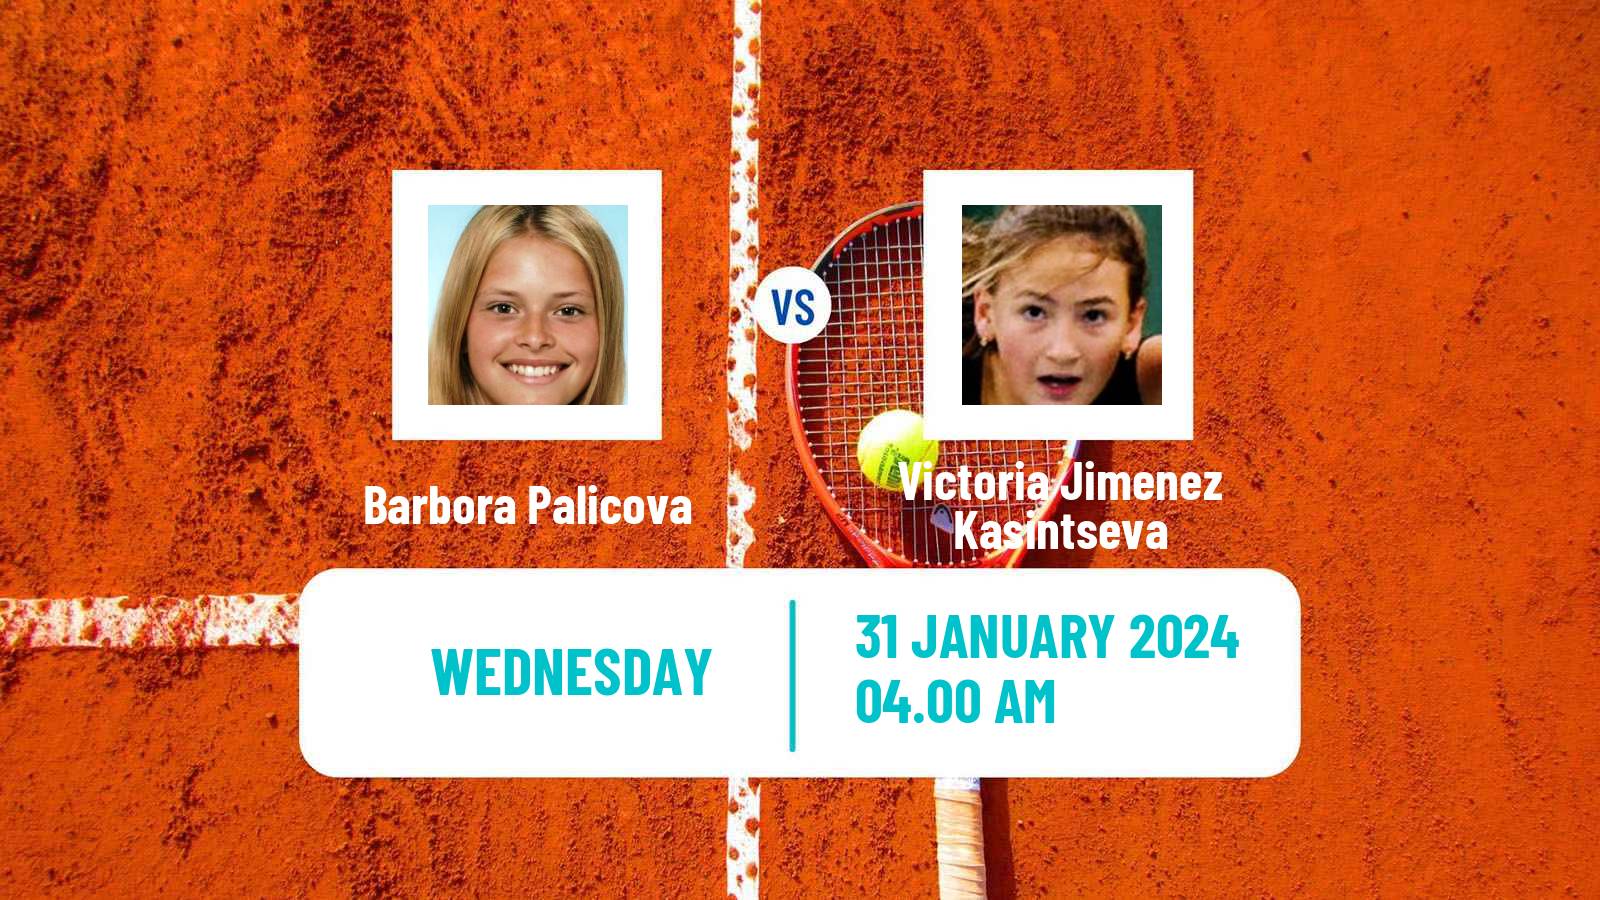 Tennis ITF W75 Andrezieux Boutheon Women Barbora Palicova - Victoria Jimenez Kasintseva